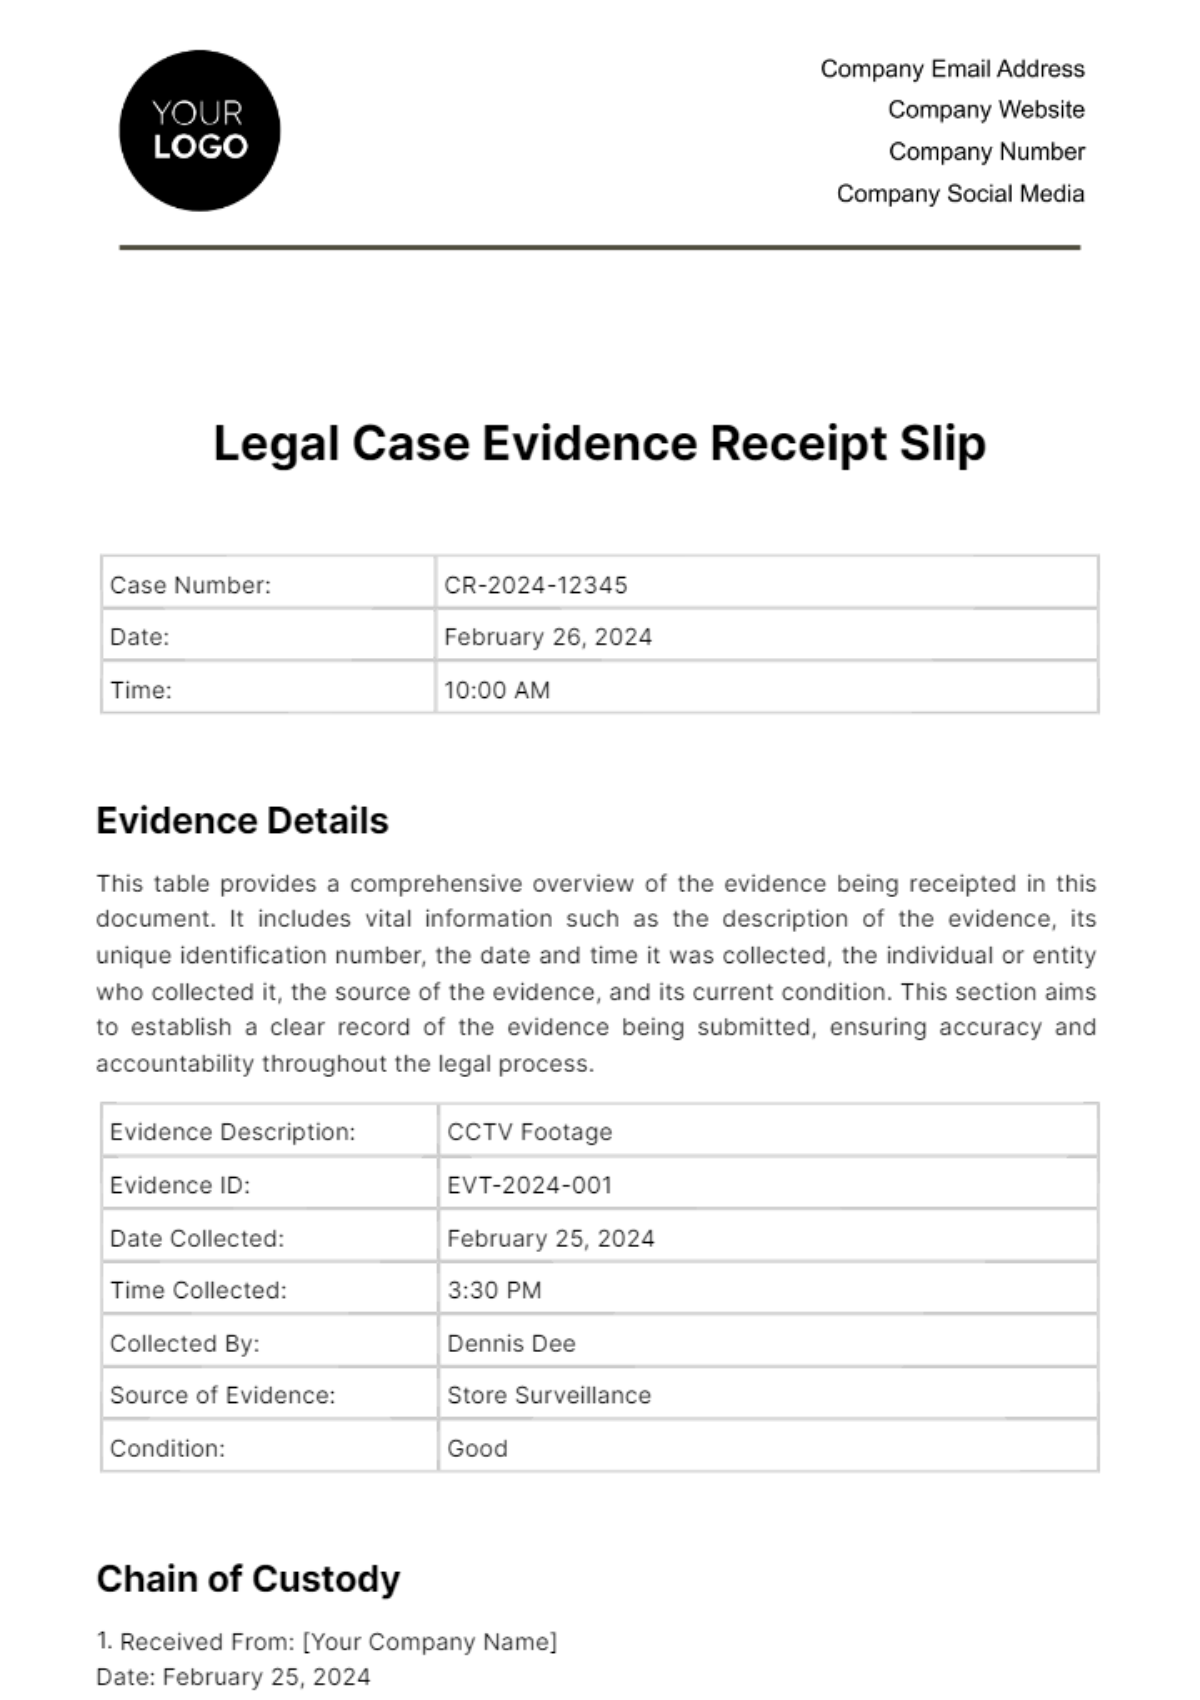 Free Legal Case Evidence Receipt Slip Template